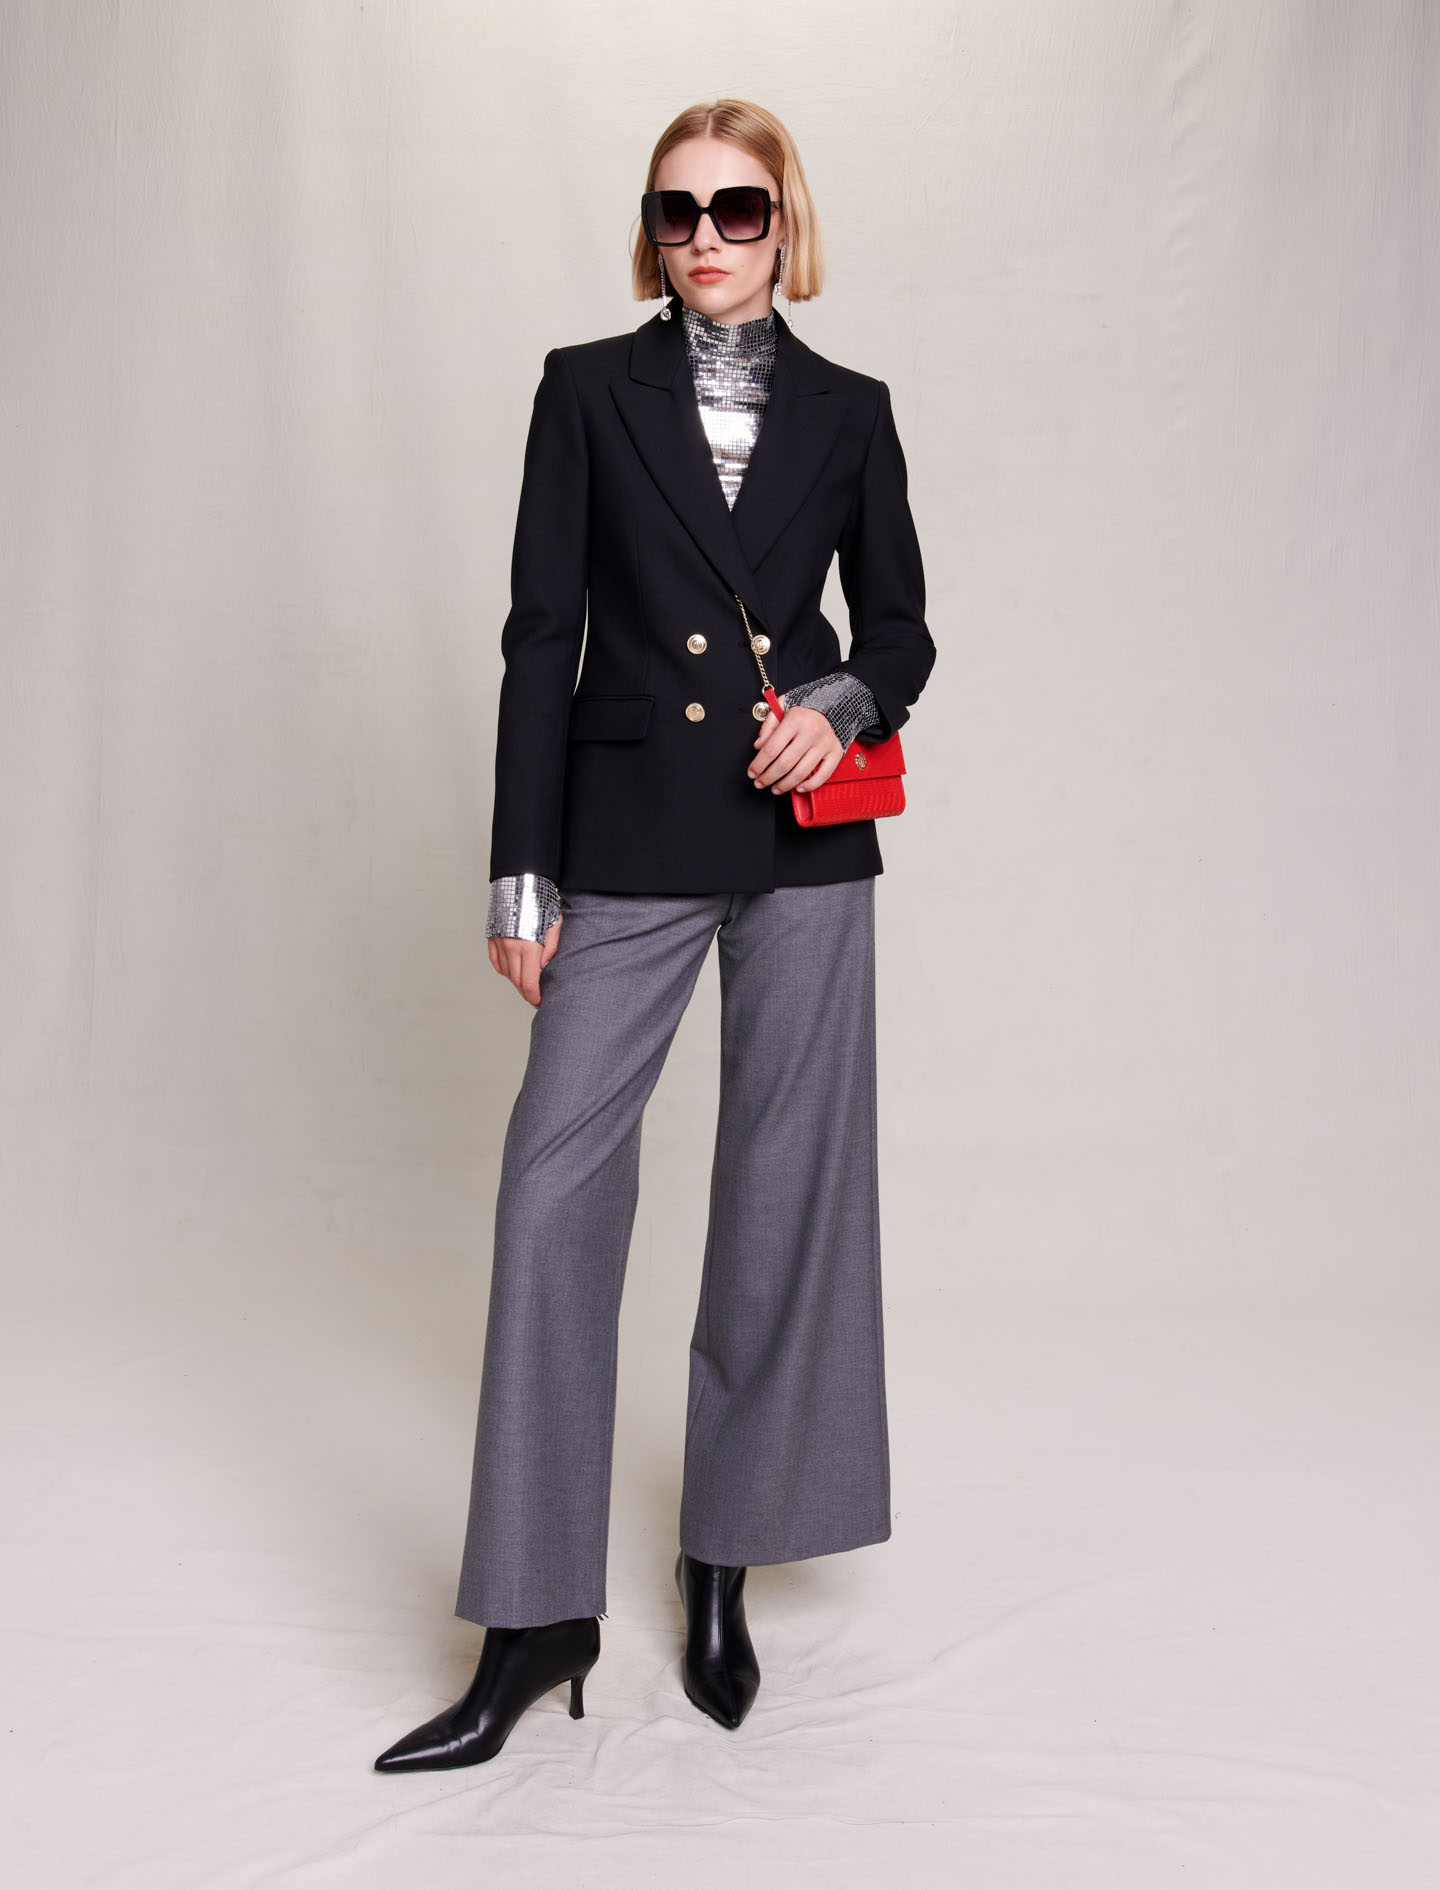 Maje Woman's polyester, Suit jacket for Spring/Summer, in color Black / Black